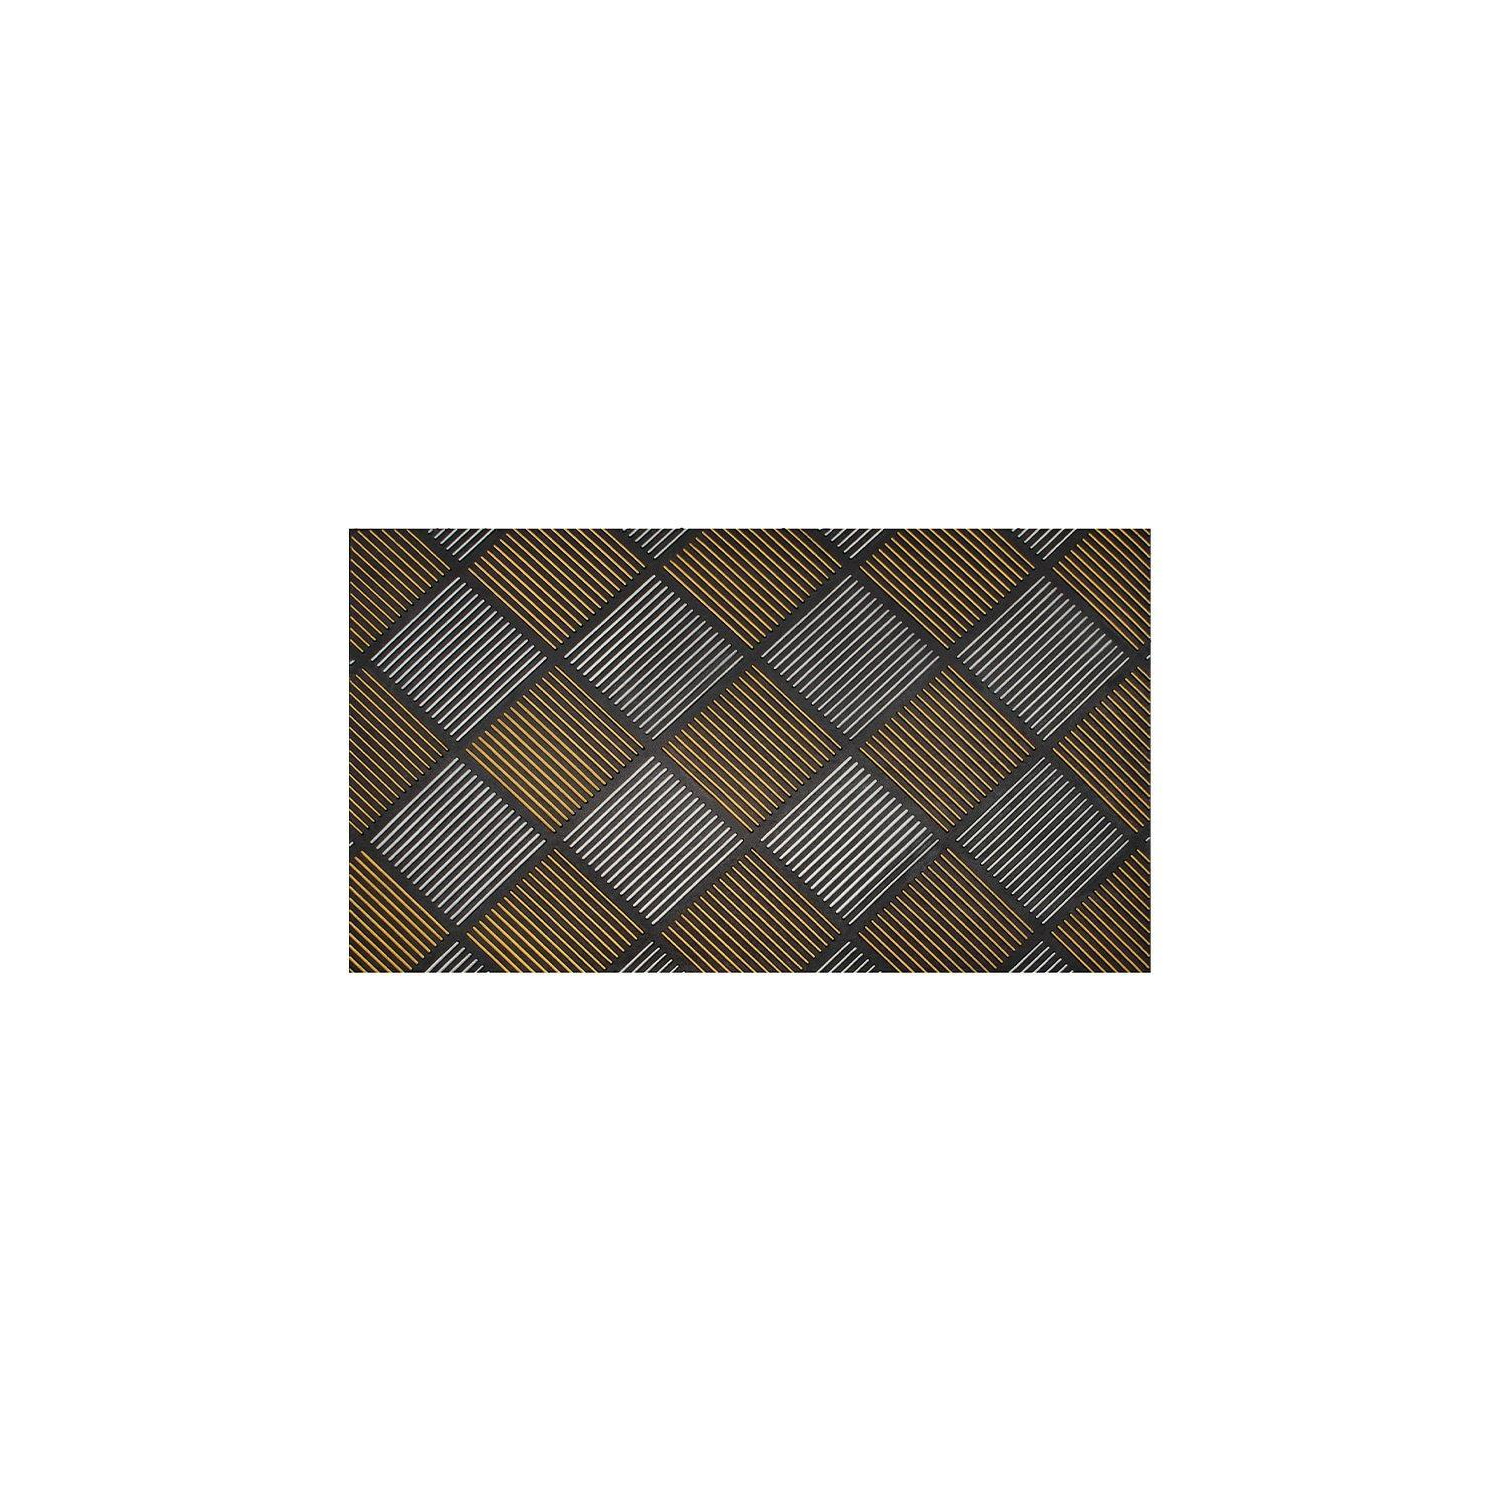 Platina Scraper Rubber Doormat 40x70cm Silver/Gold - image 1